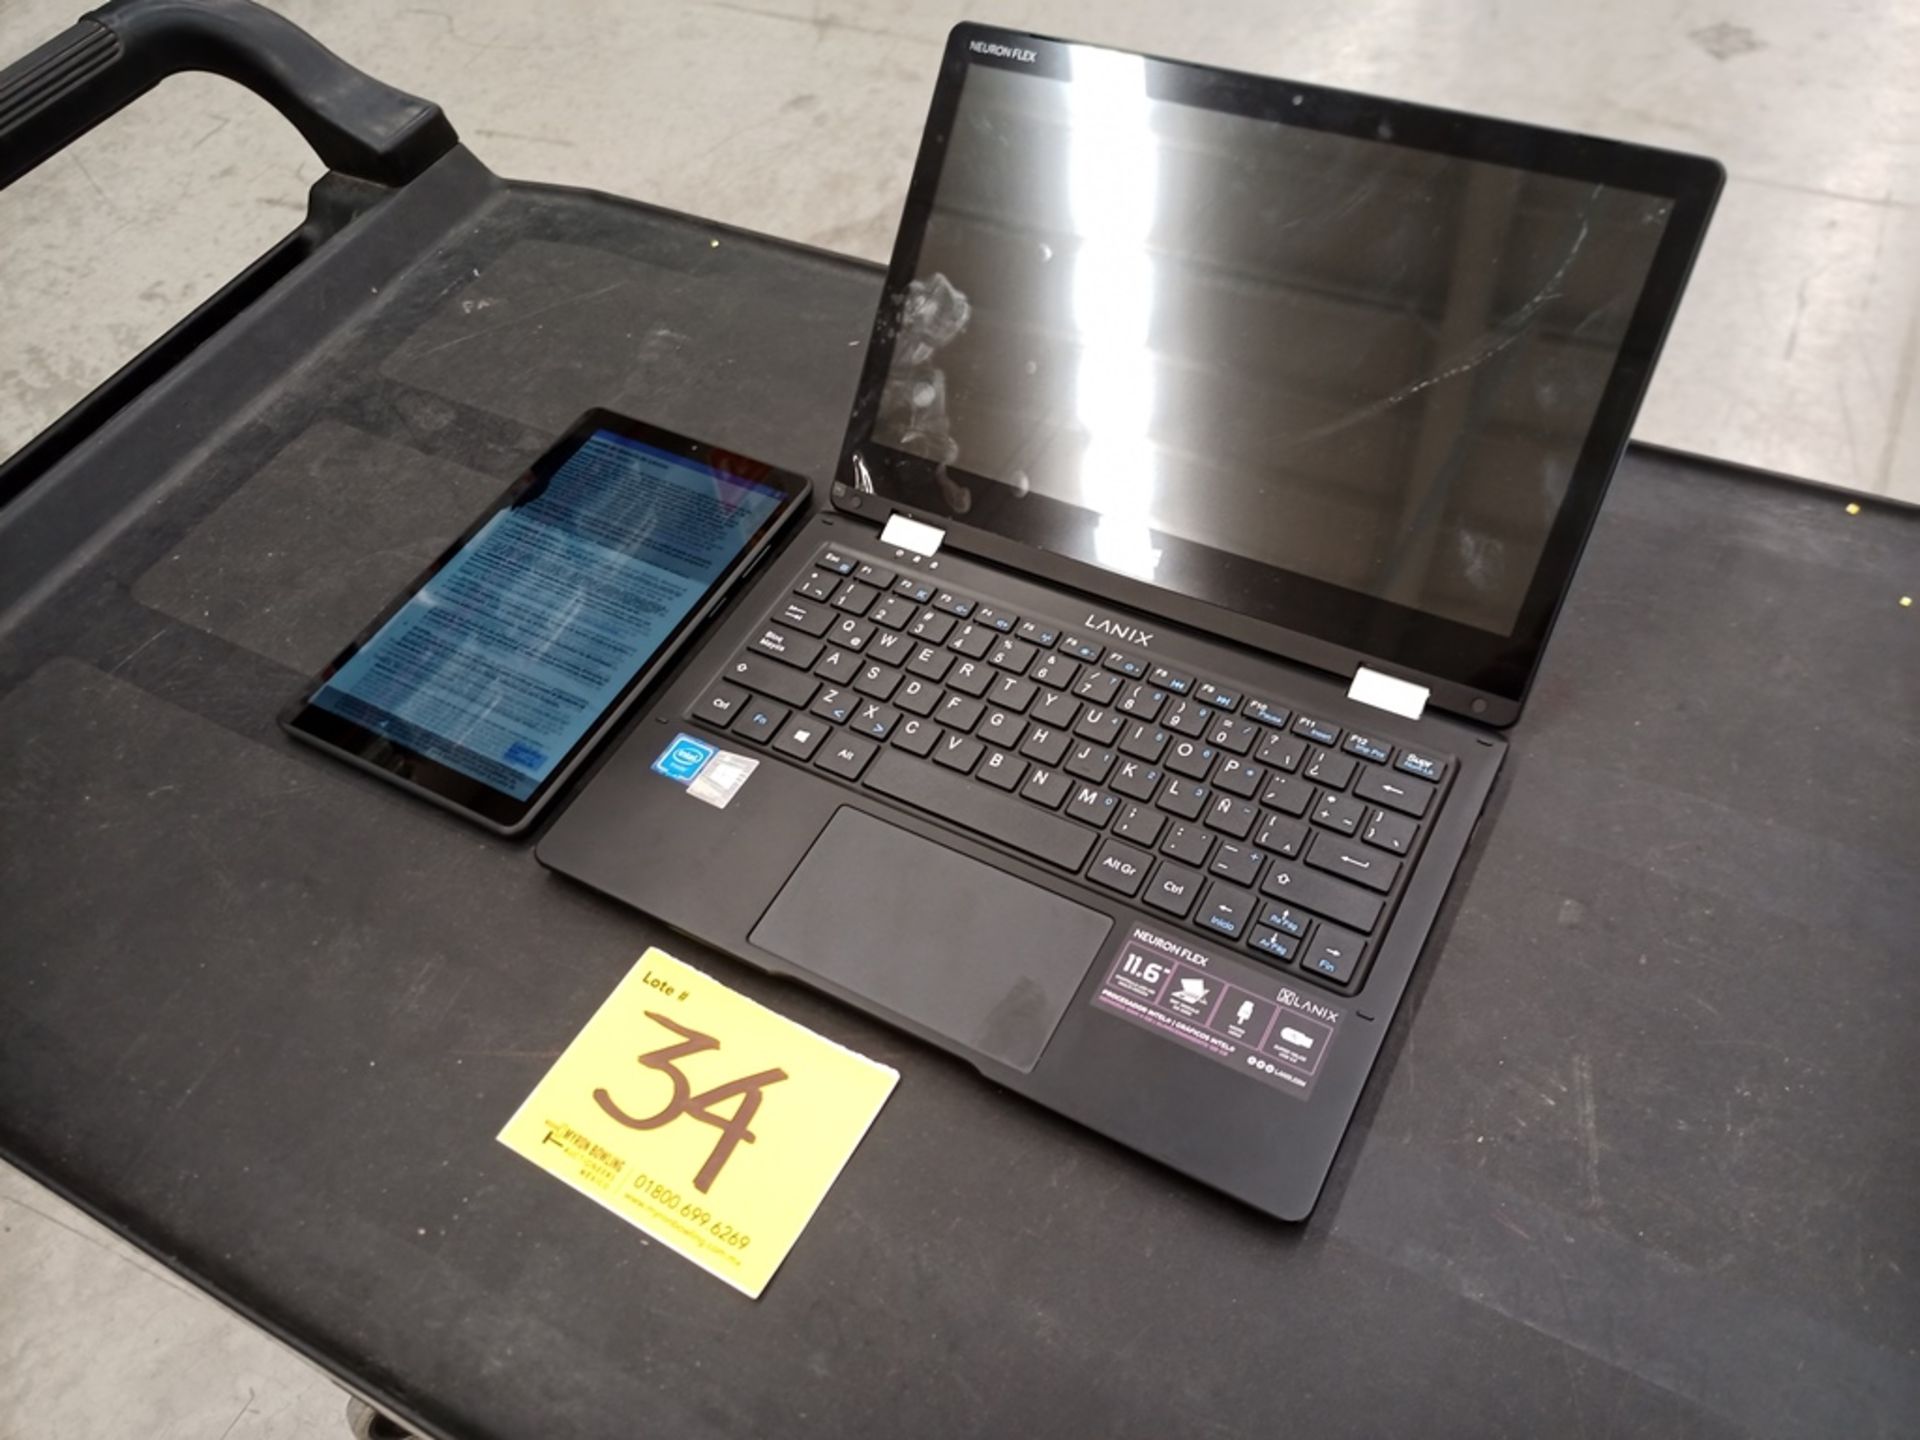 Lote de Computadora + Tablet contiene: 1 Computadora tipo mini Laptop marca Lanix, Modelo NeuronFle - Image 3 of 9